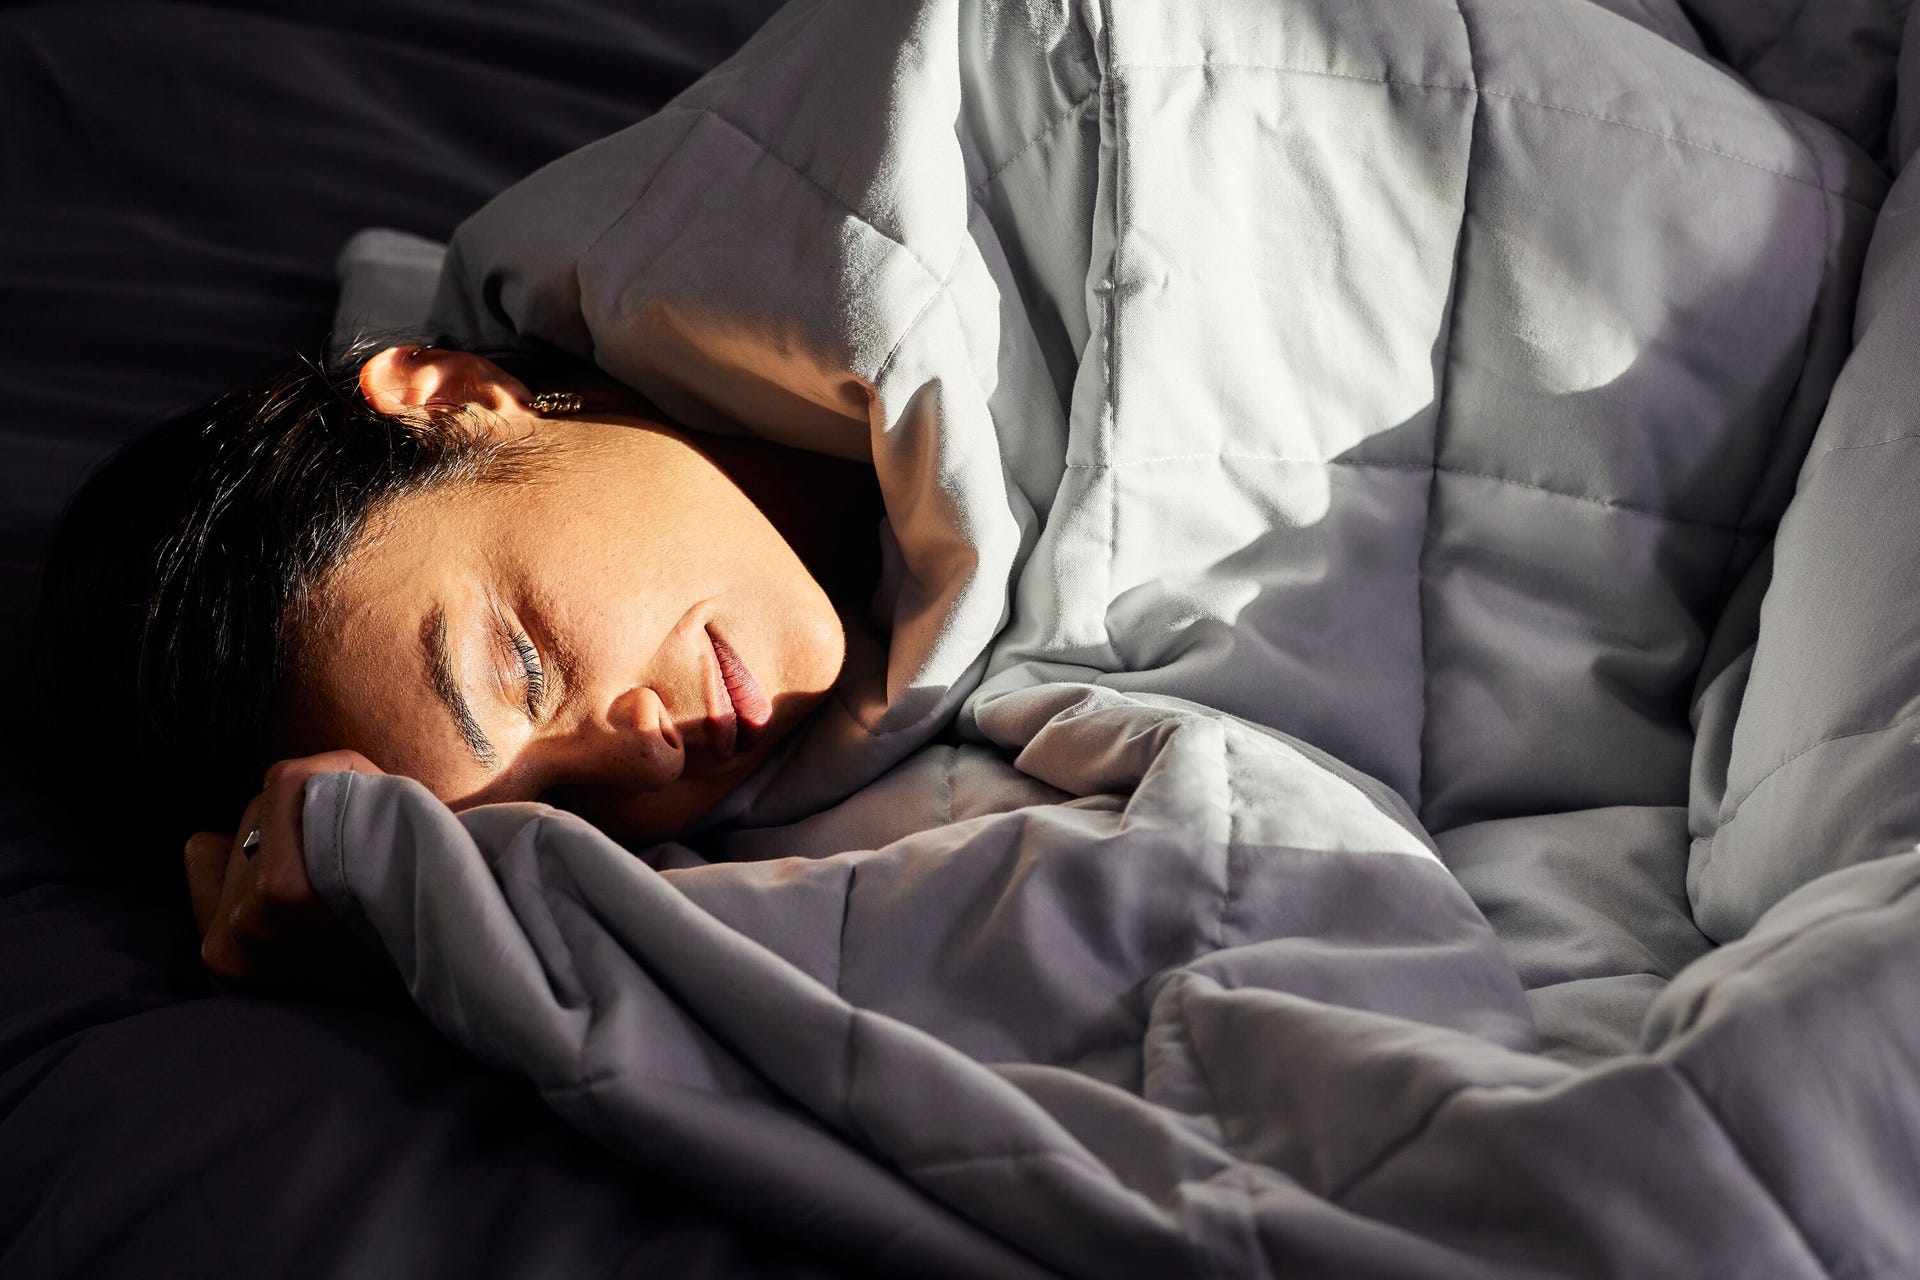 Emma Hug Weighted Blanket, Fall asleep & relax more easily.